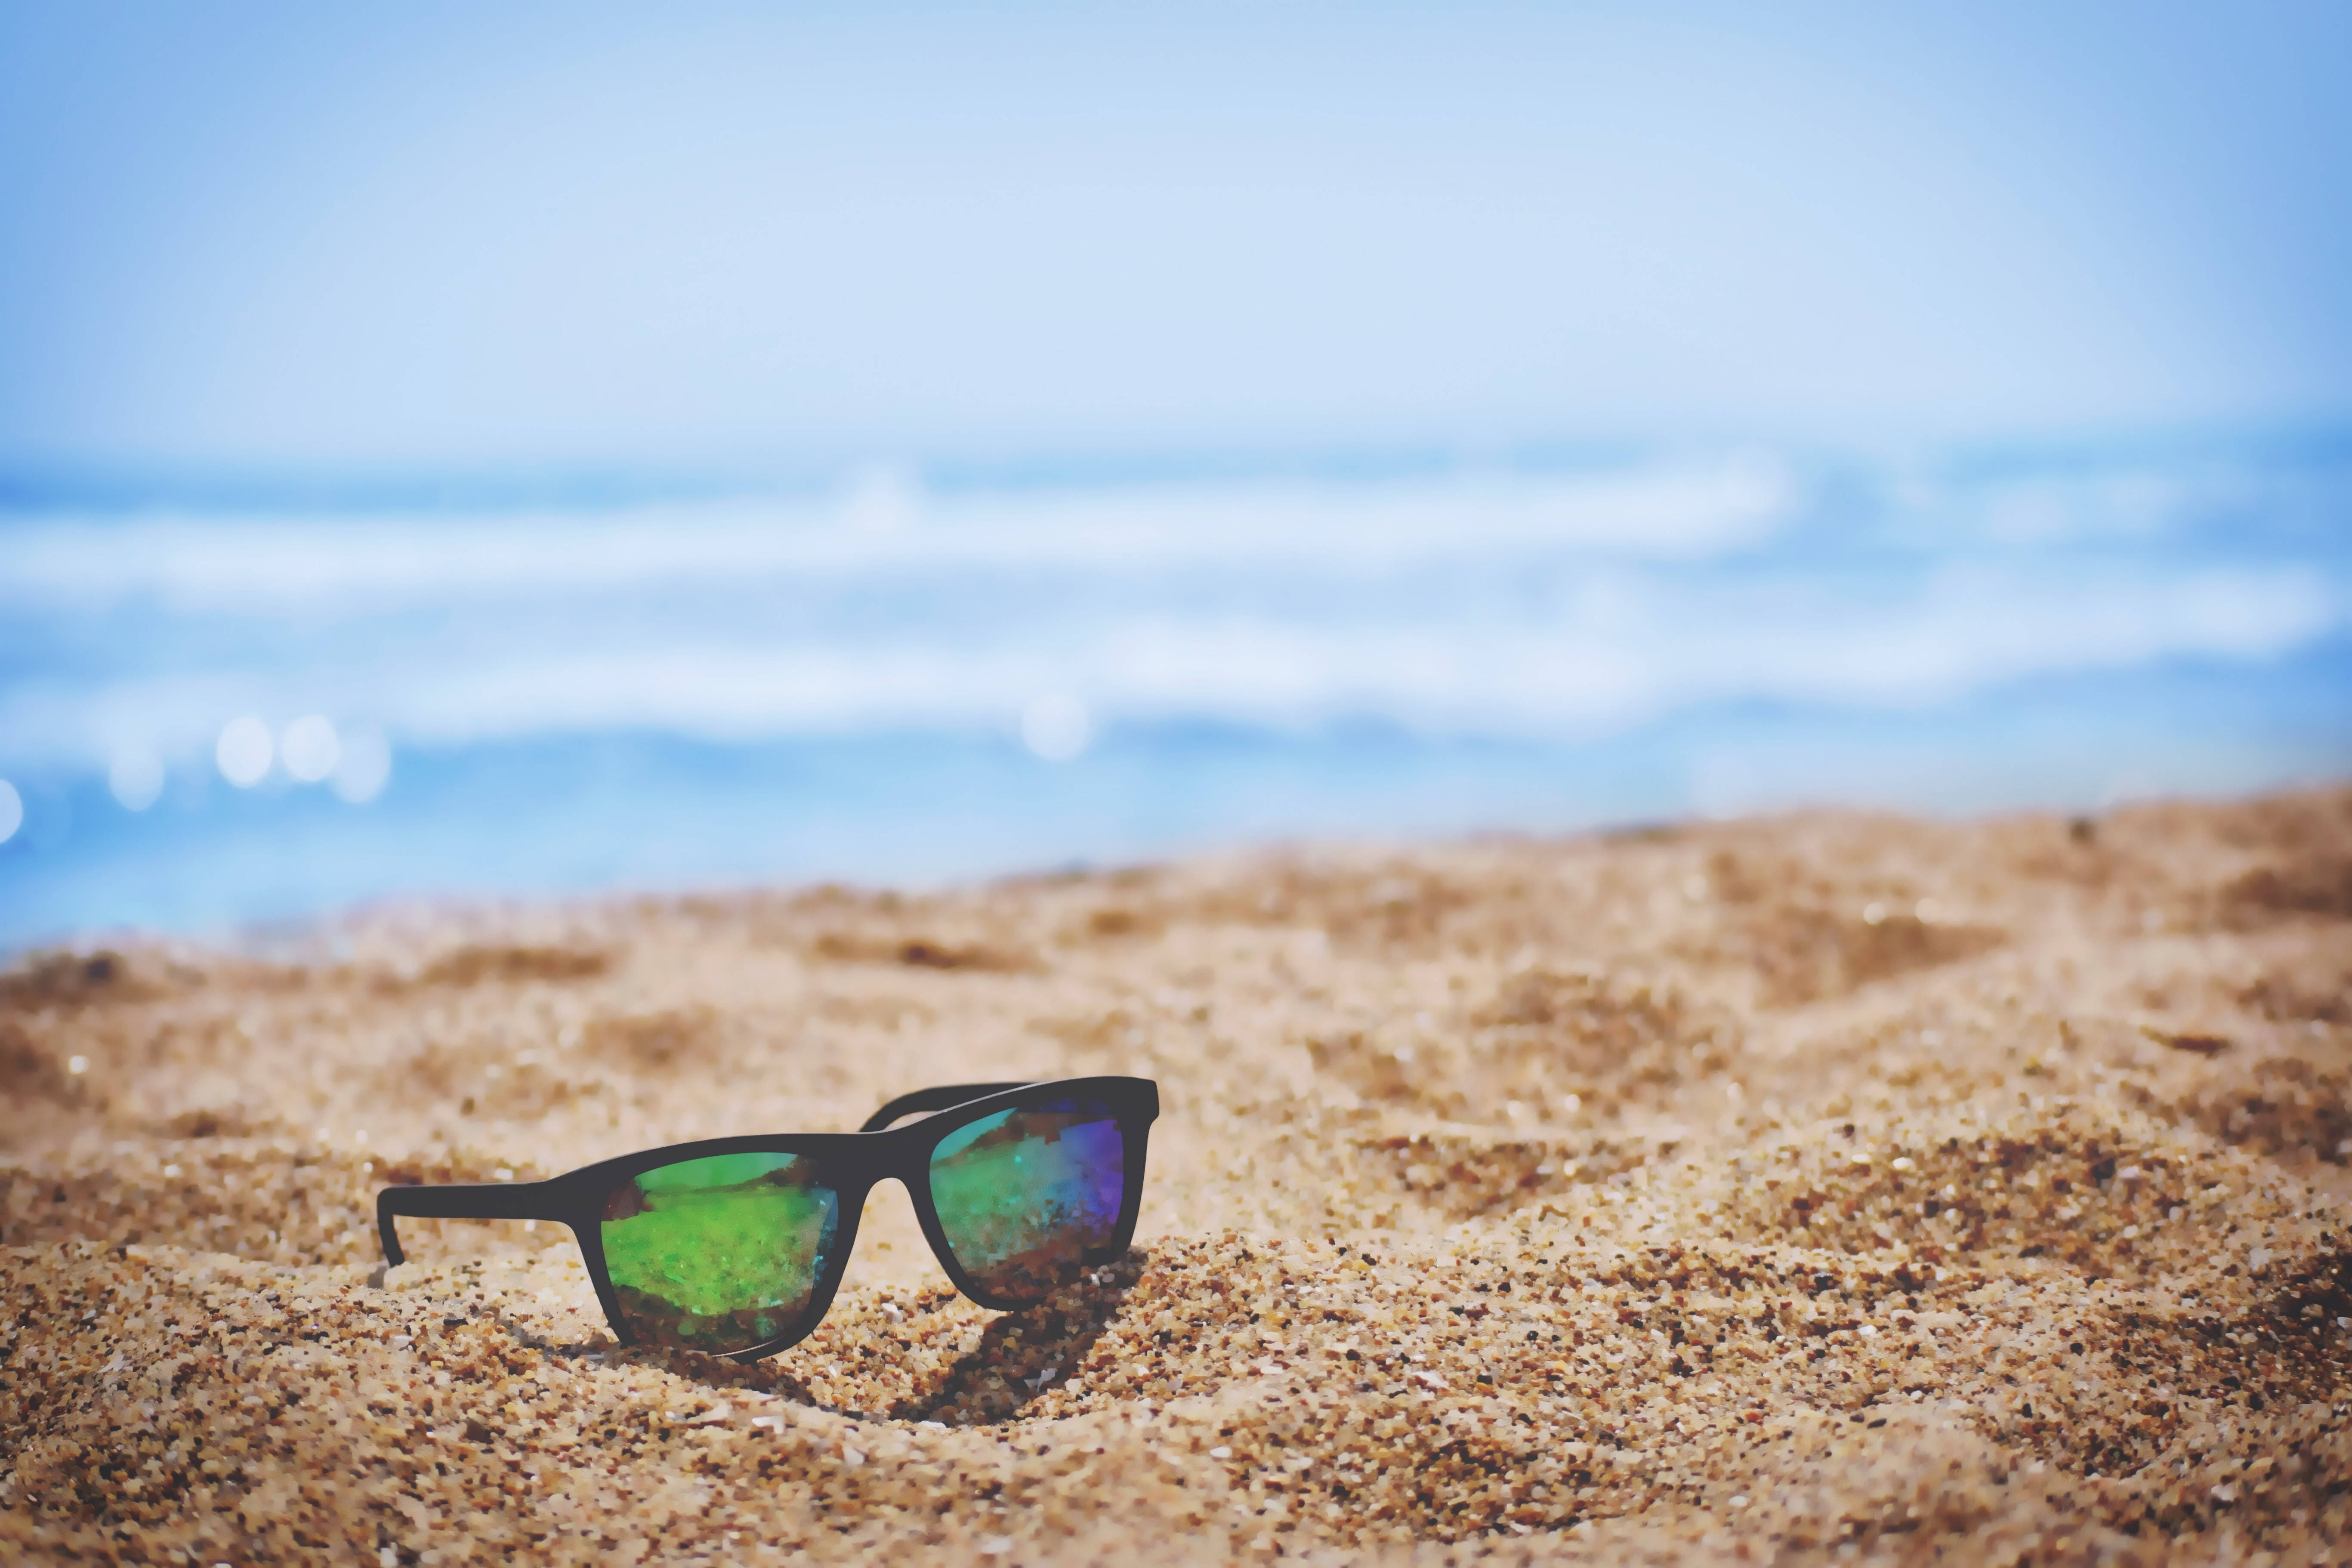 1920x1080 Hd Beach Desktop Sunglasses On The Sand